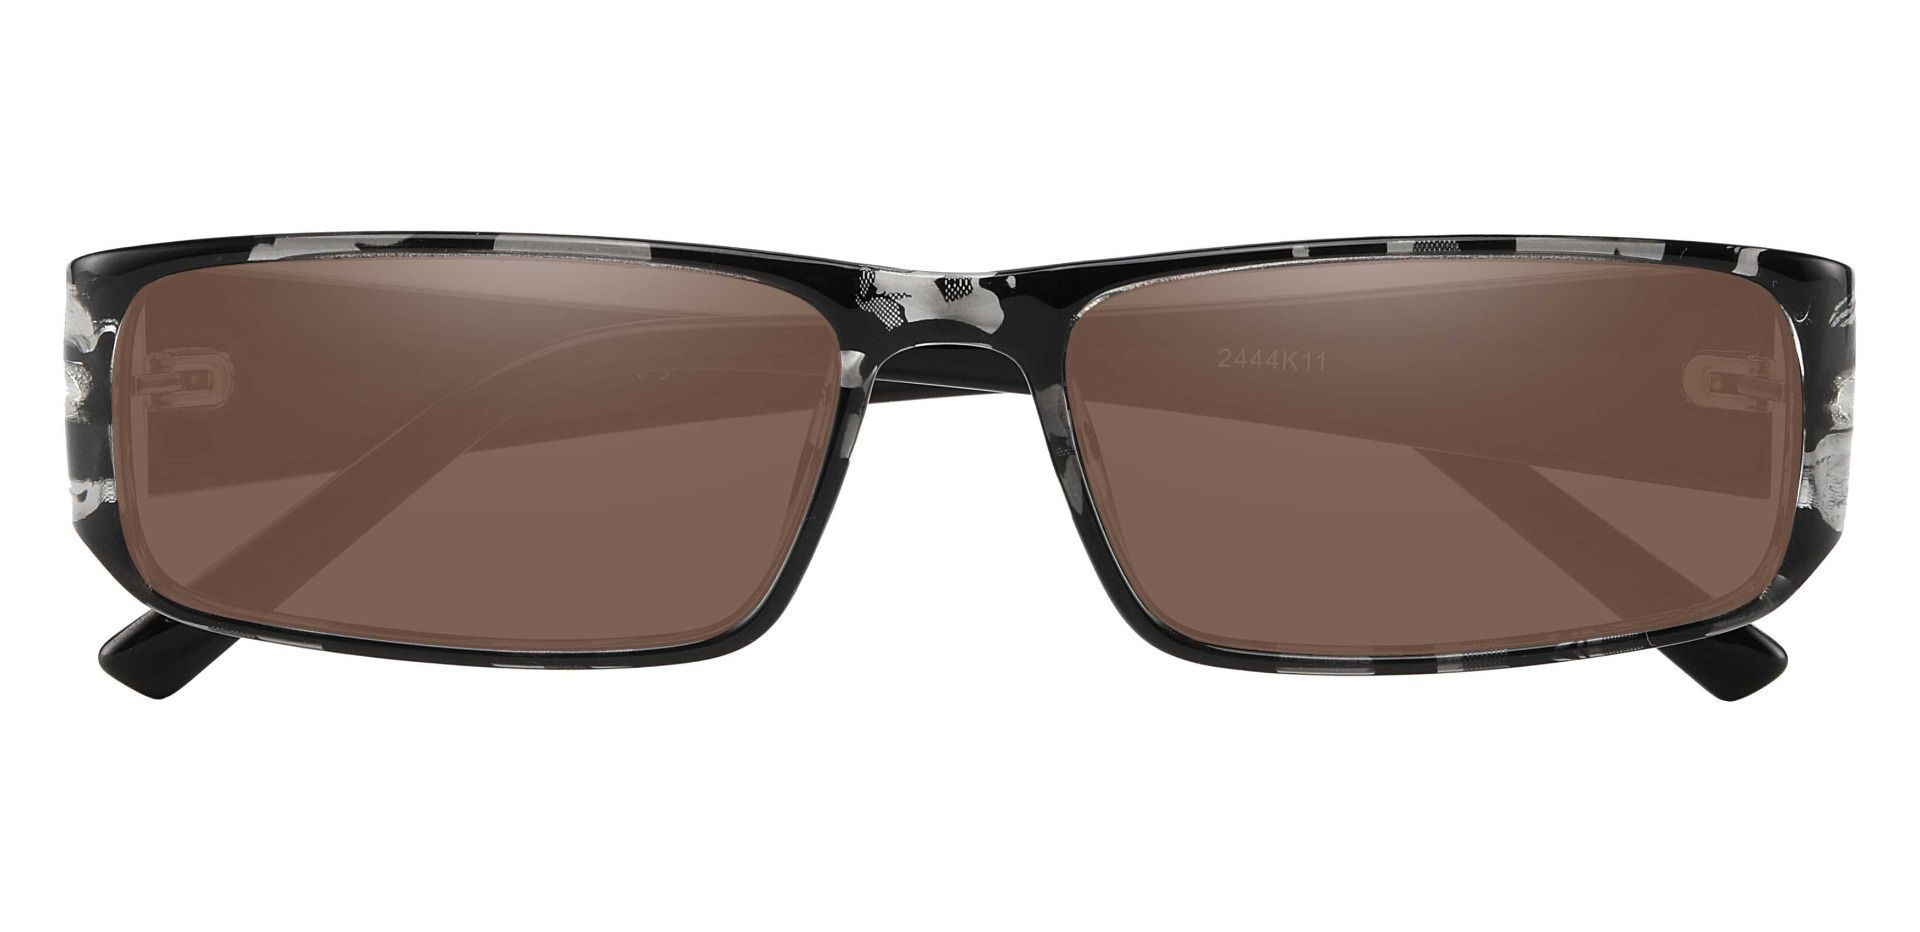 Elbert Rectangle Reading Sunglasses - Black Frame With Brown Lenses